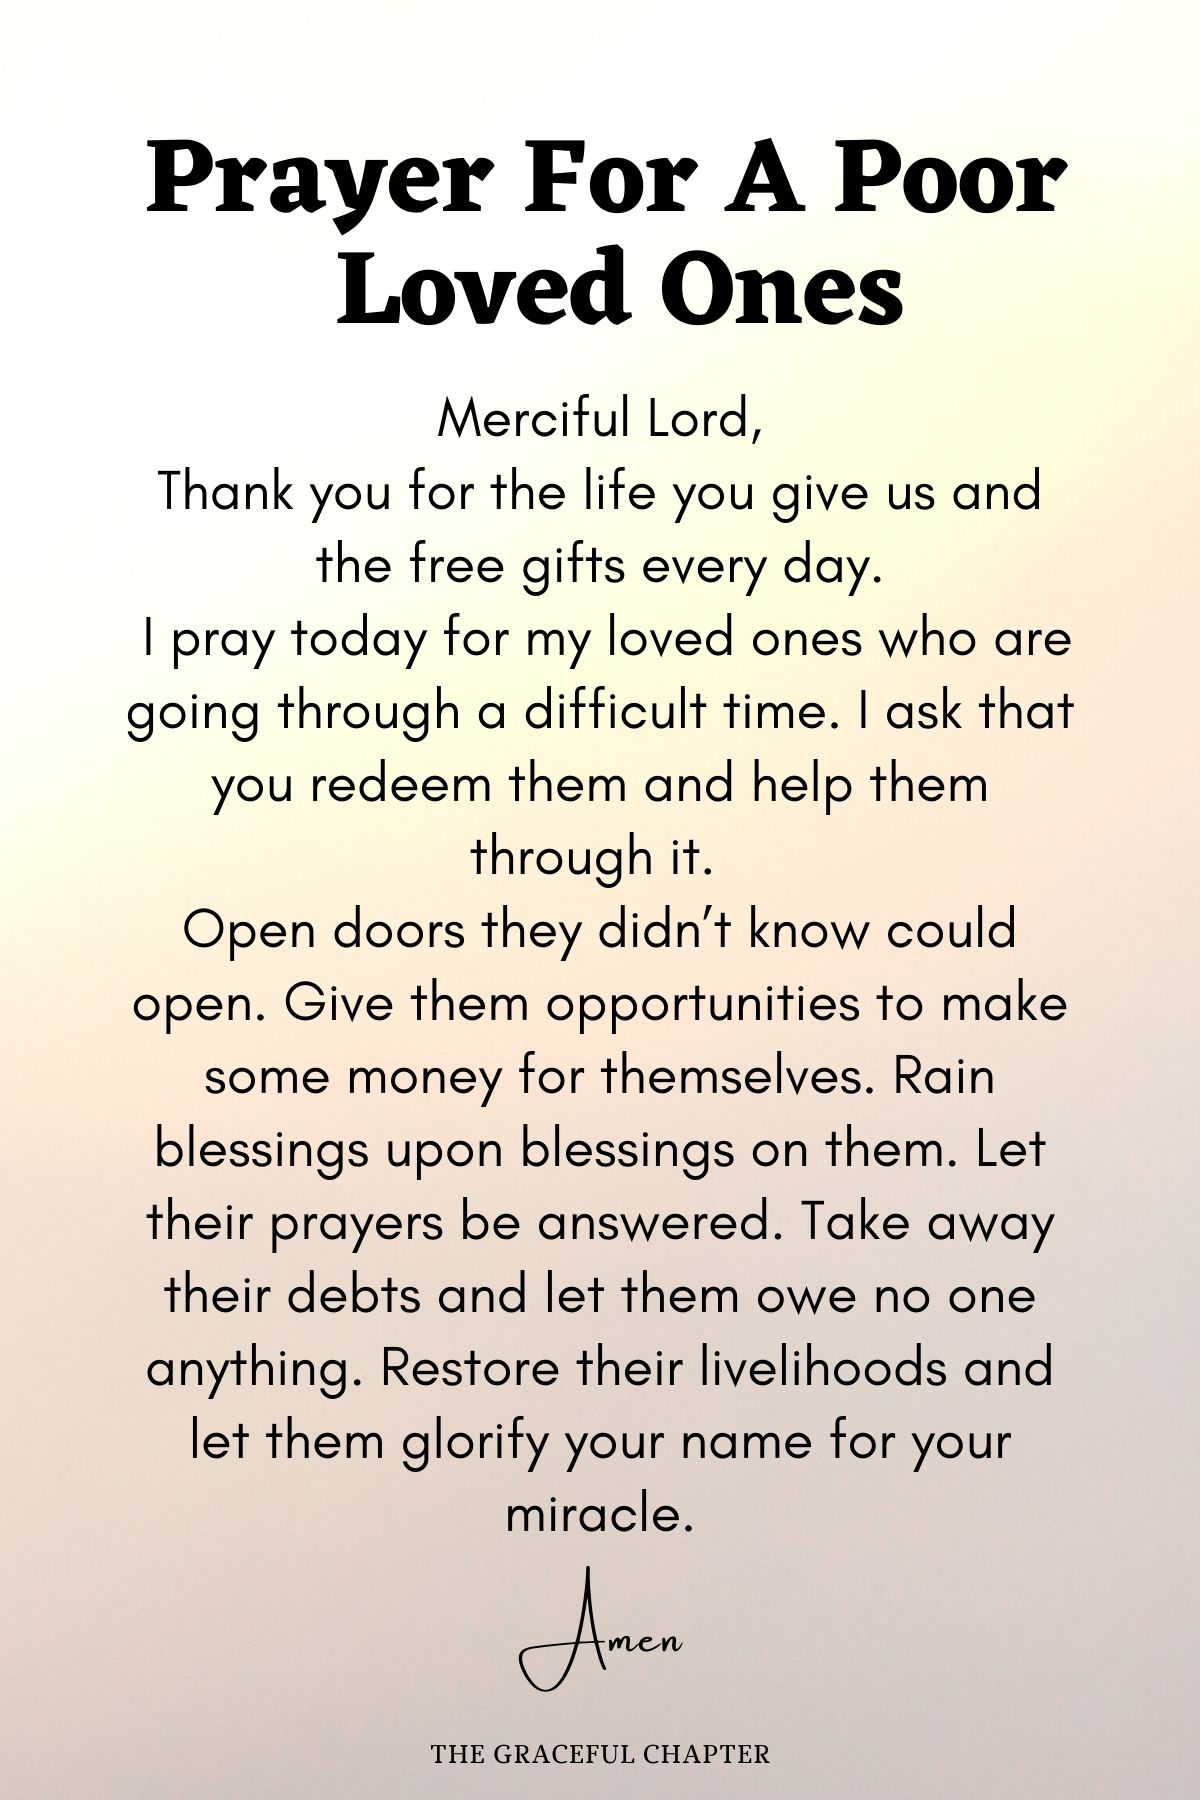 Prayer for poor loved ones